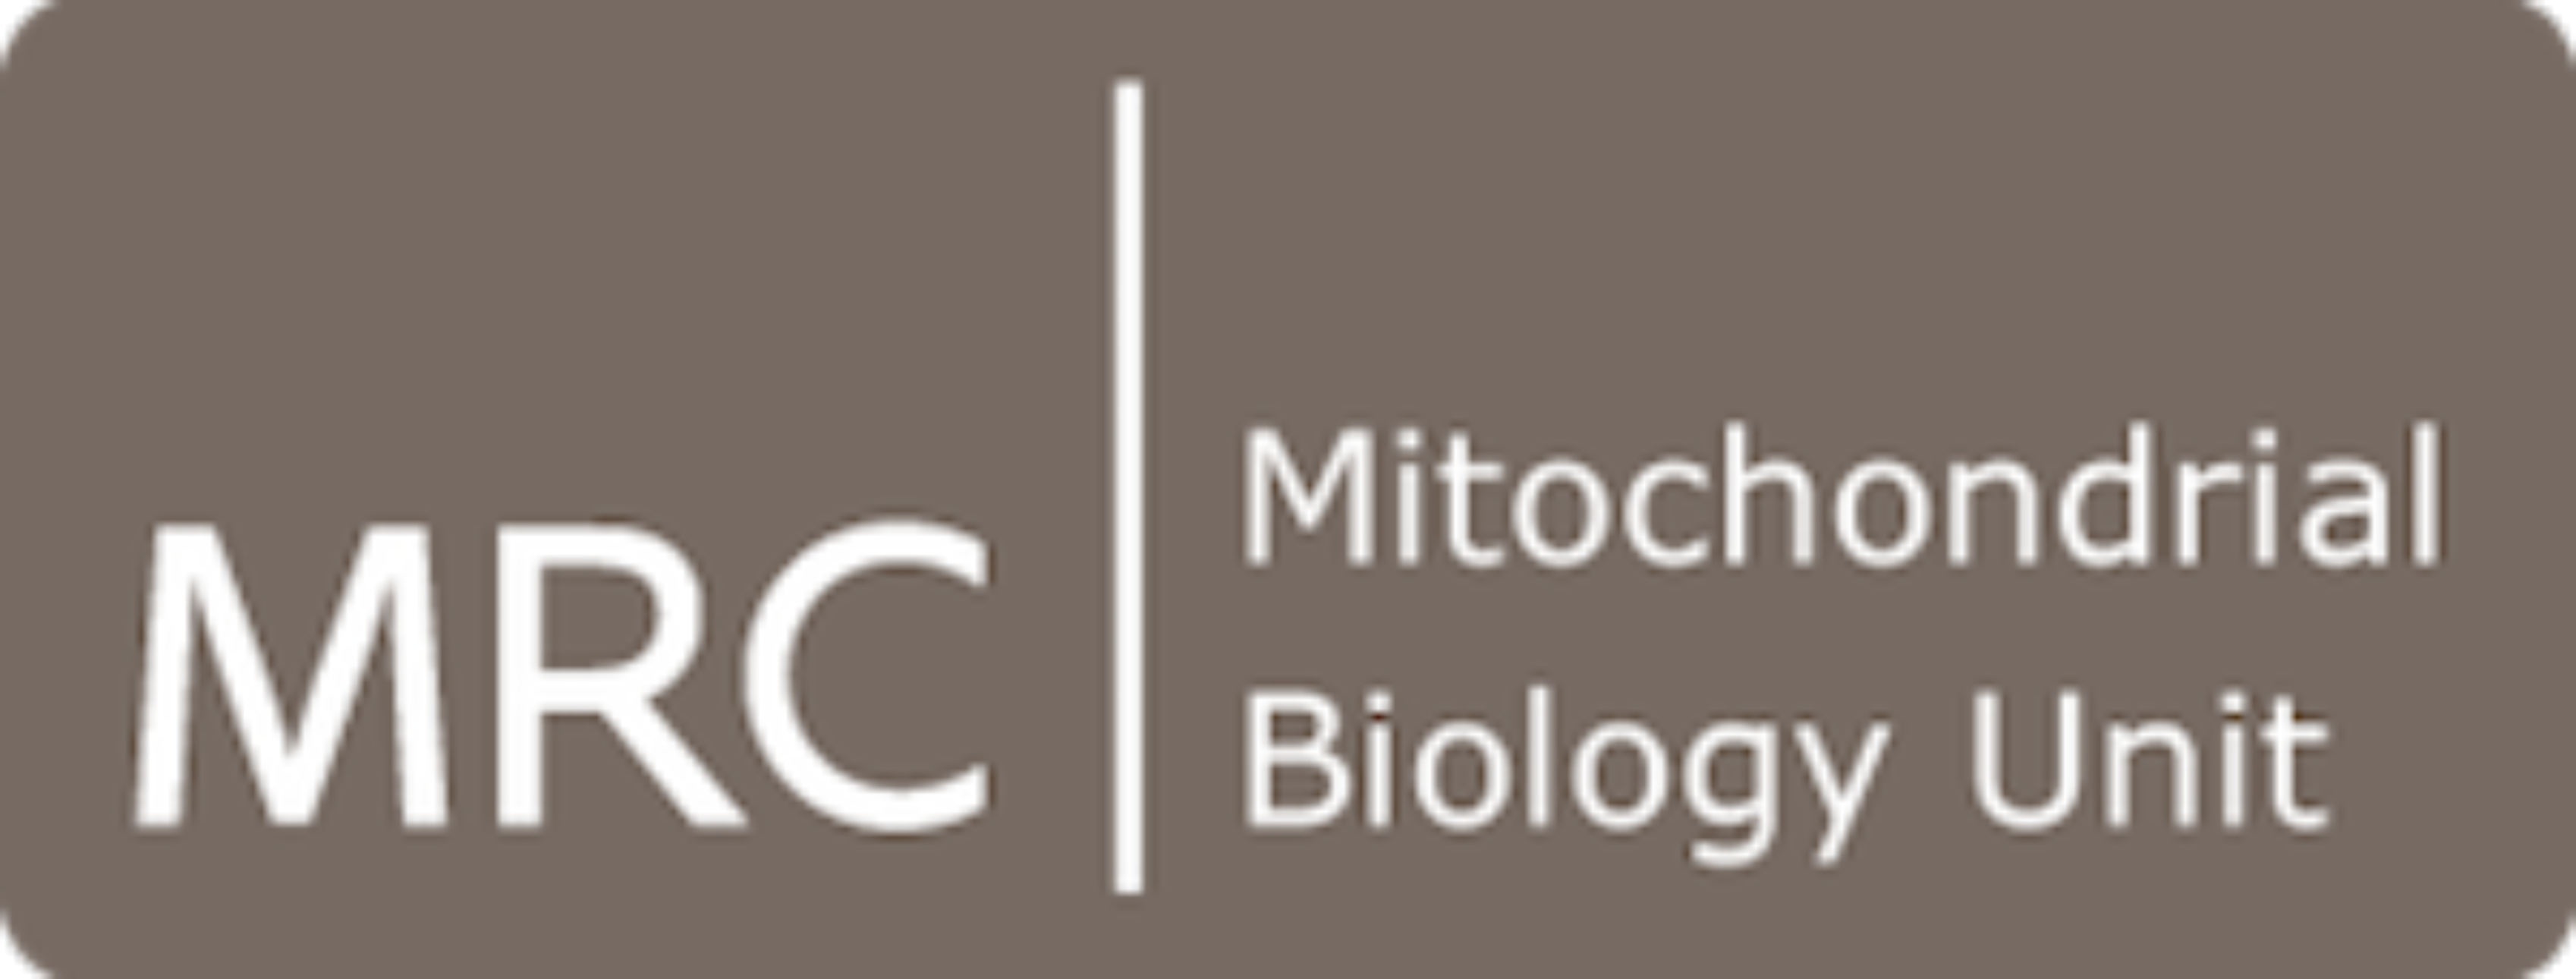 MRC Mitochondrial Biology Unit